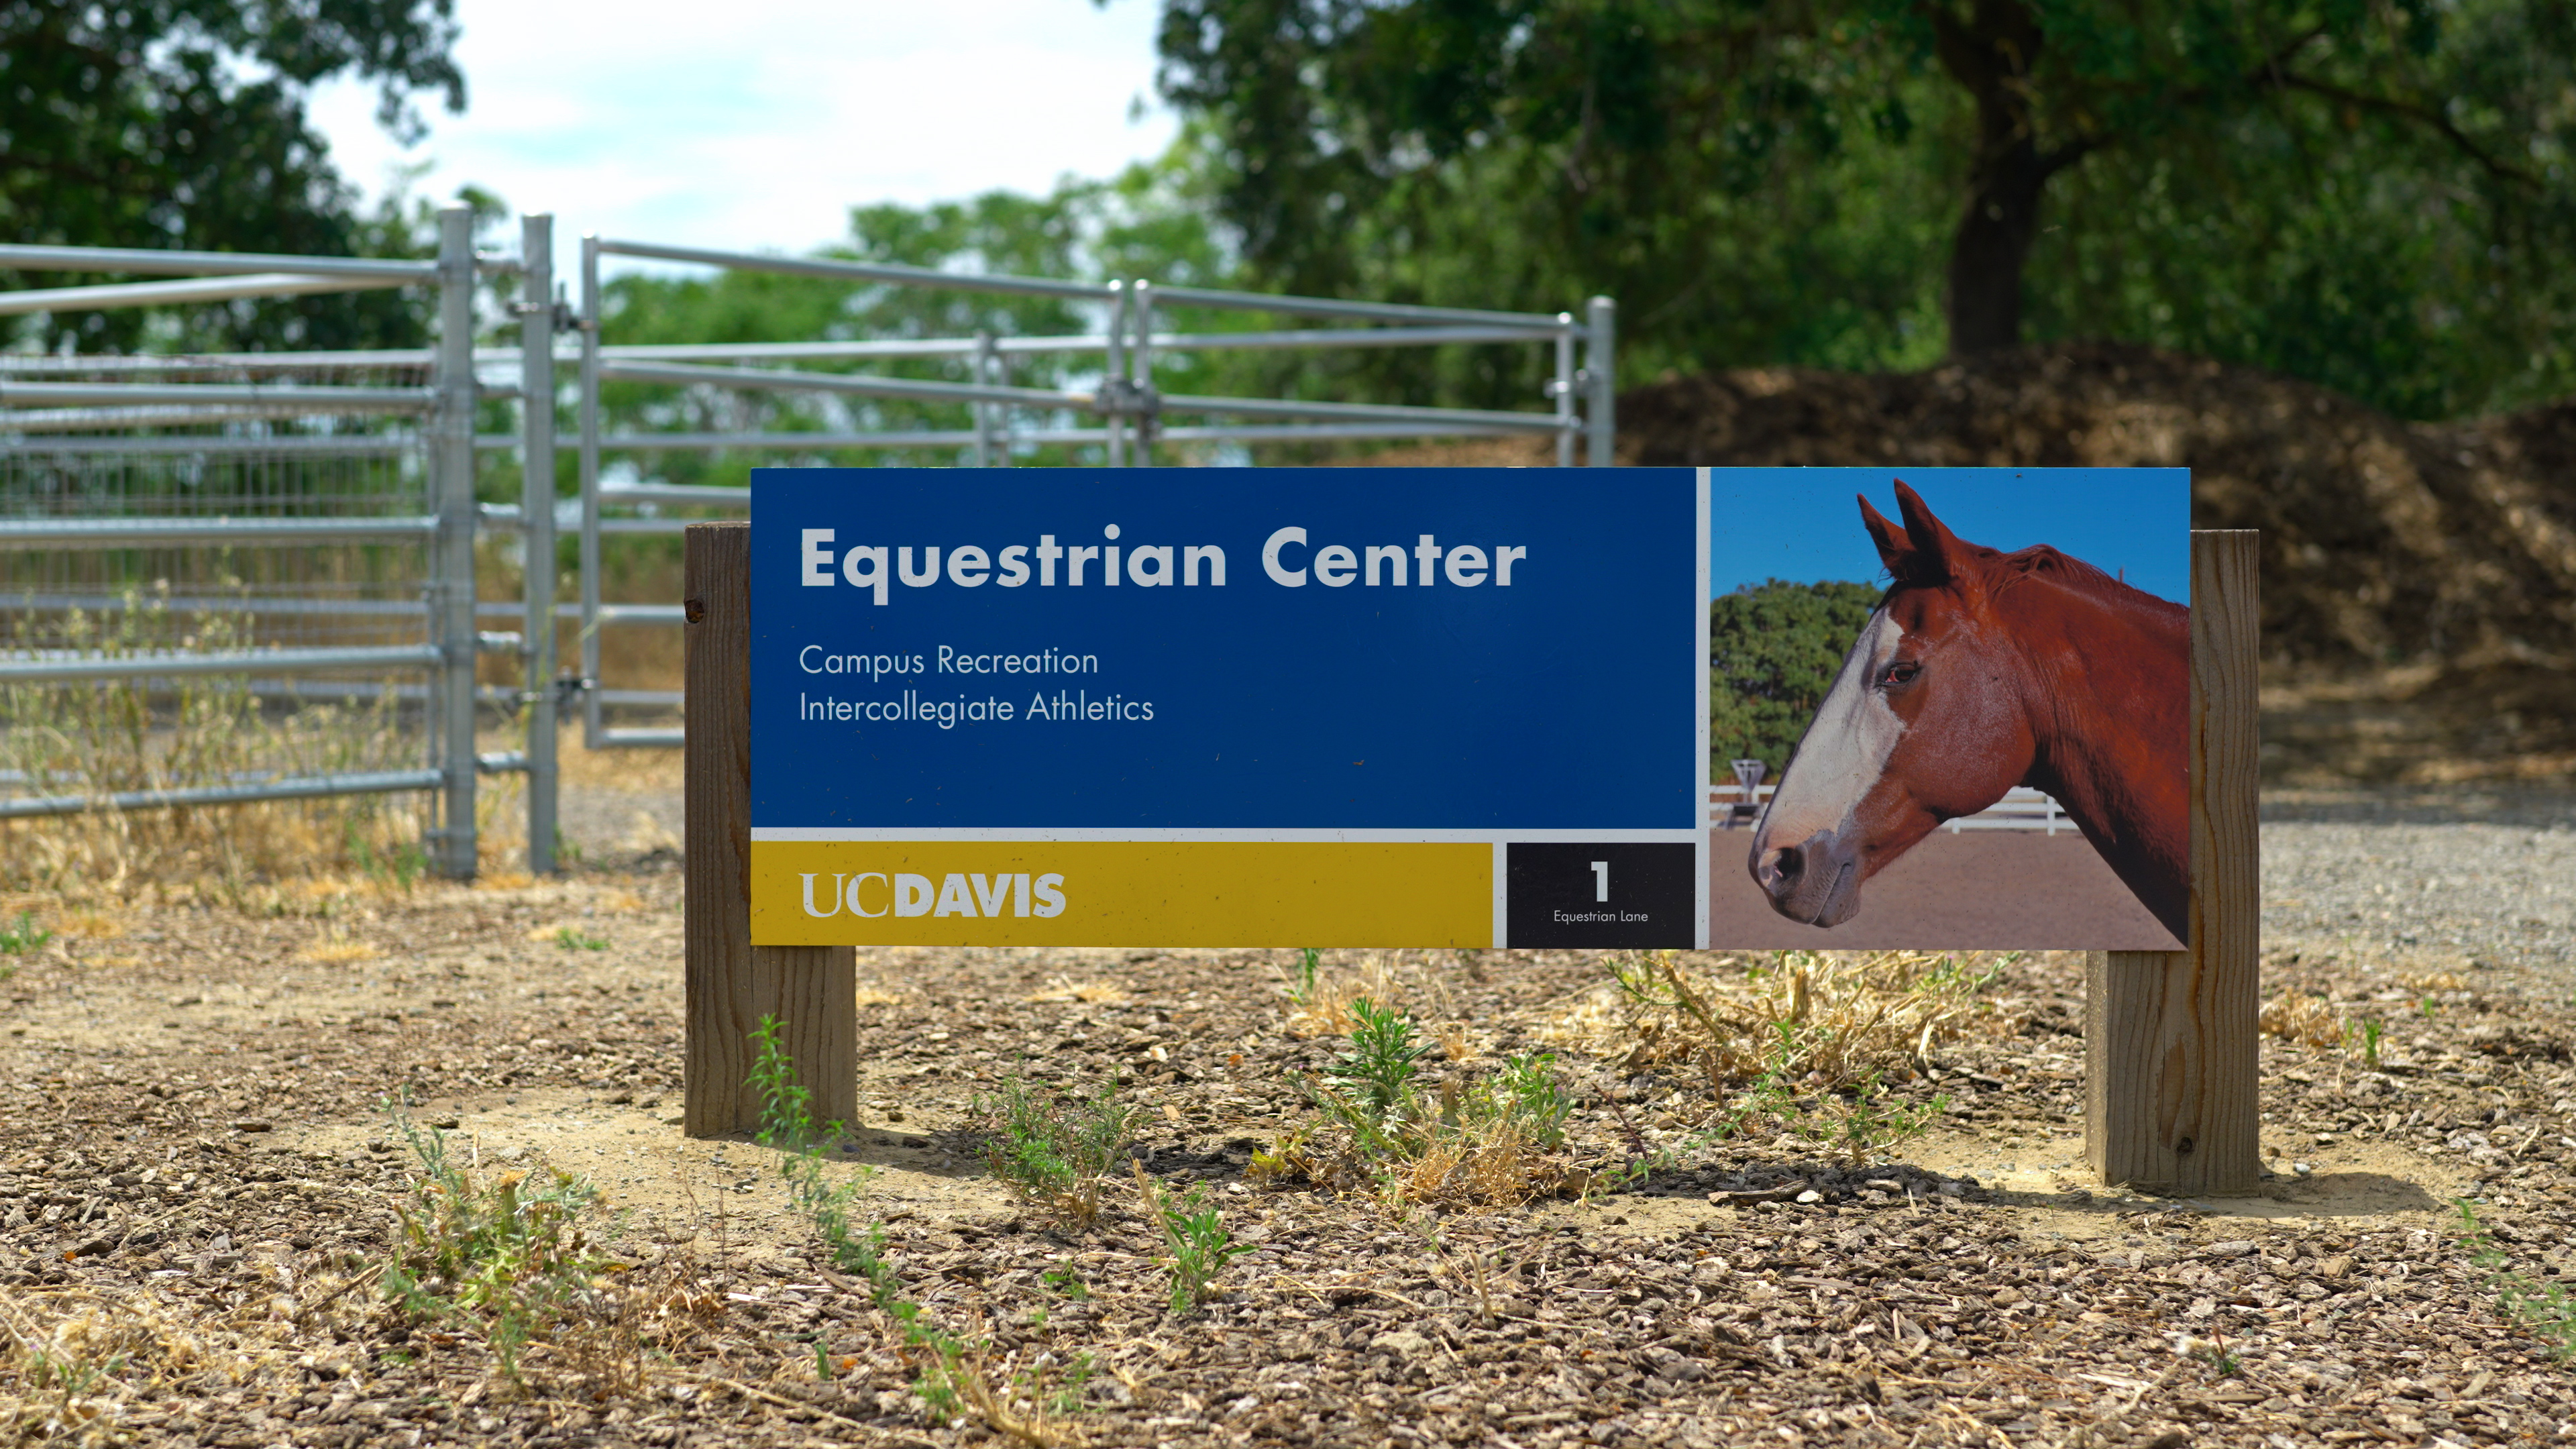 Equestrian Center sign at UC Davis